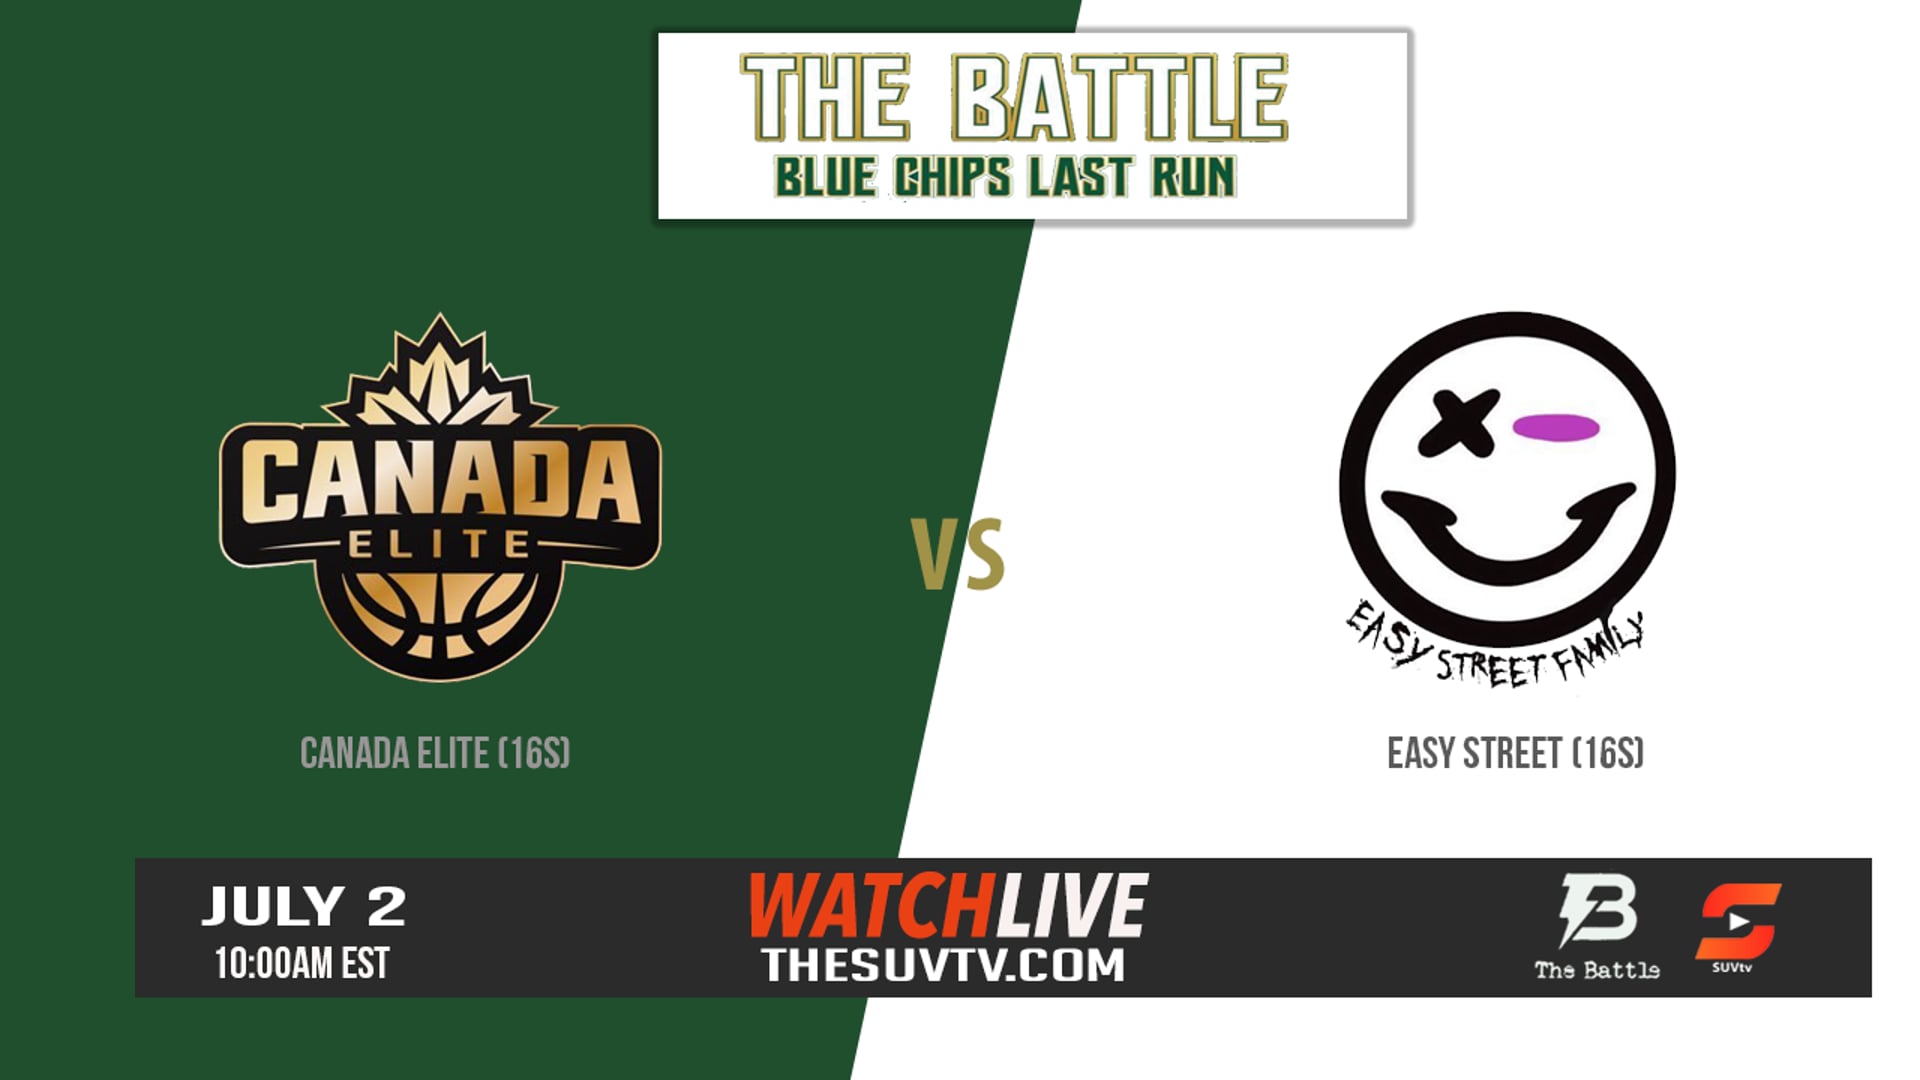 Easy Street vs. Canada Elite (16S)